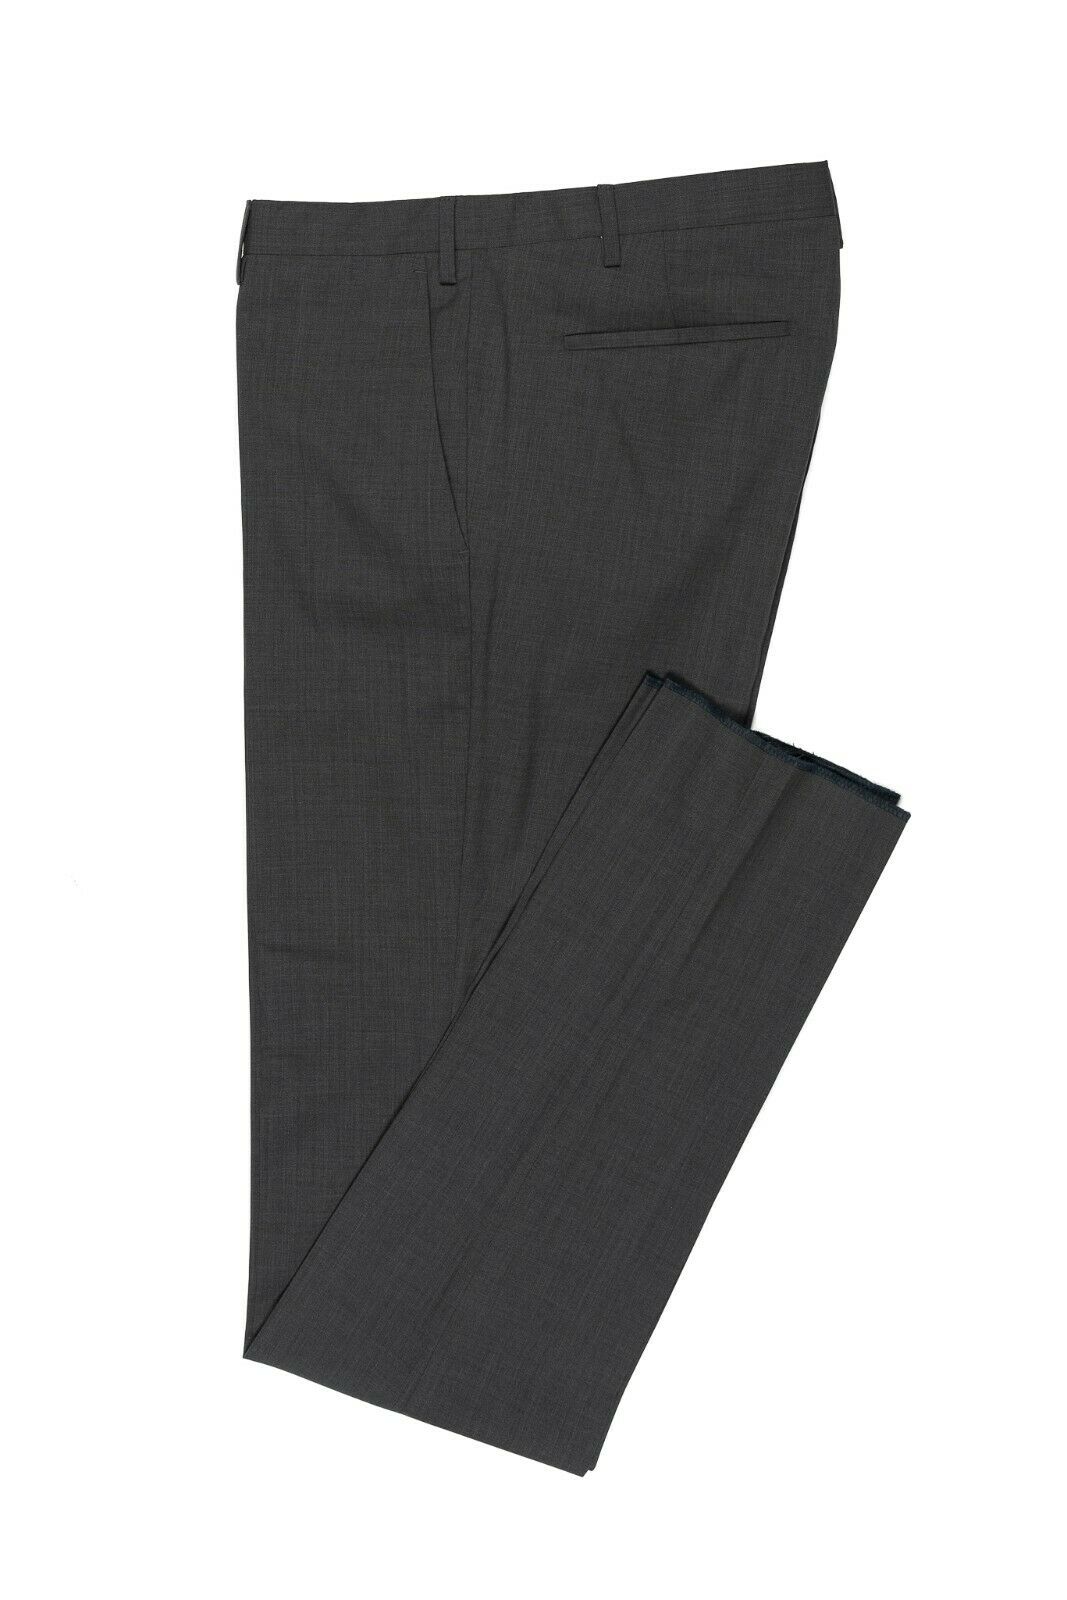 260$ GERMANO Medium Gray Trousers Dress Pants Fine Wool 140's Reg ...